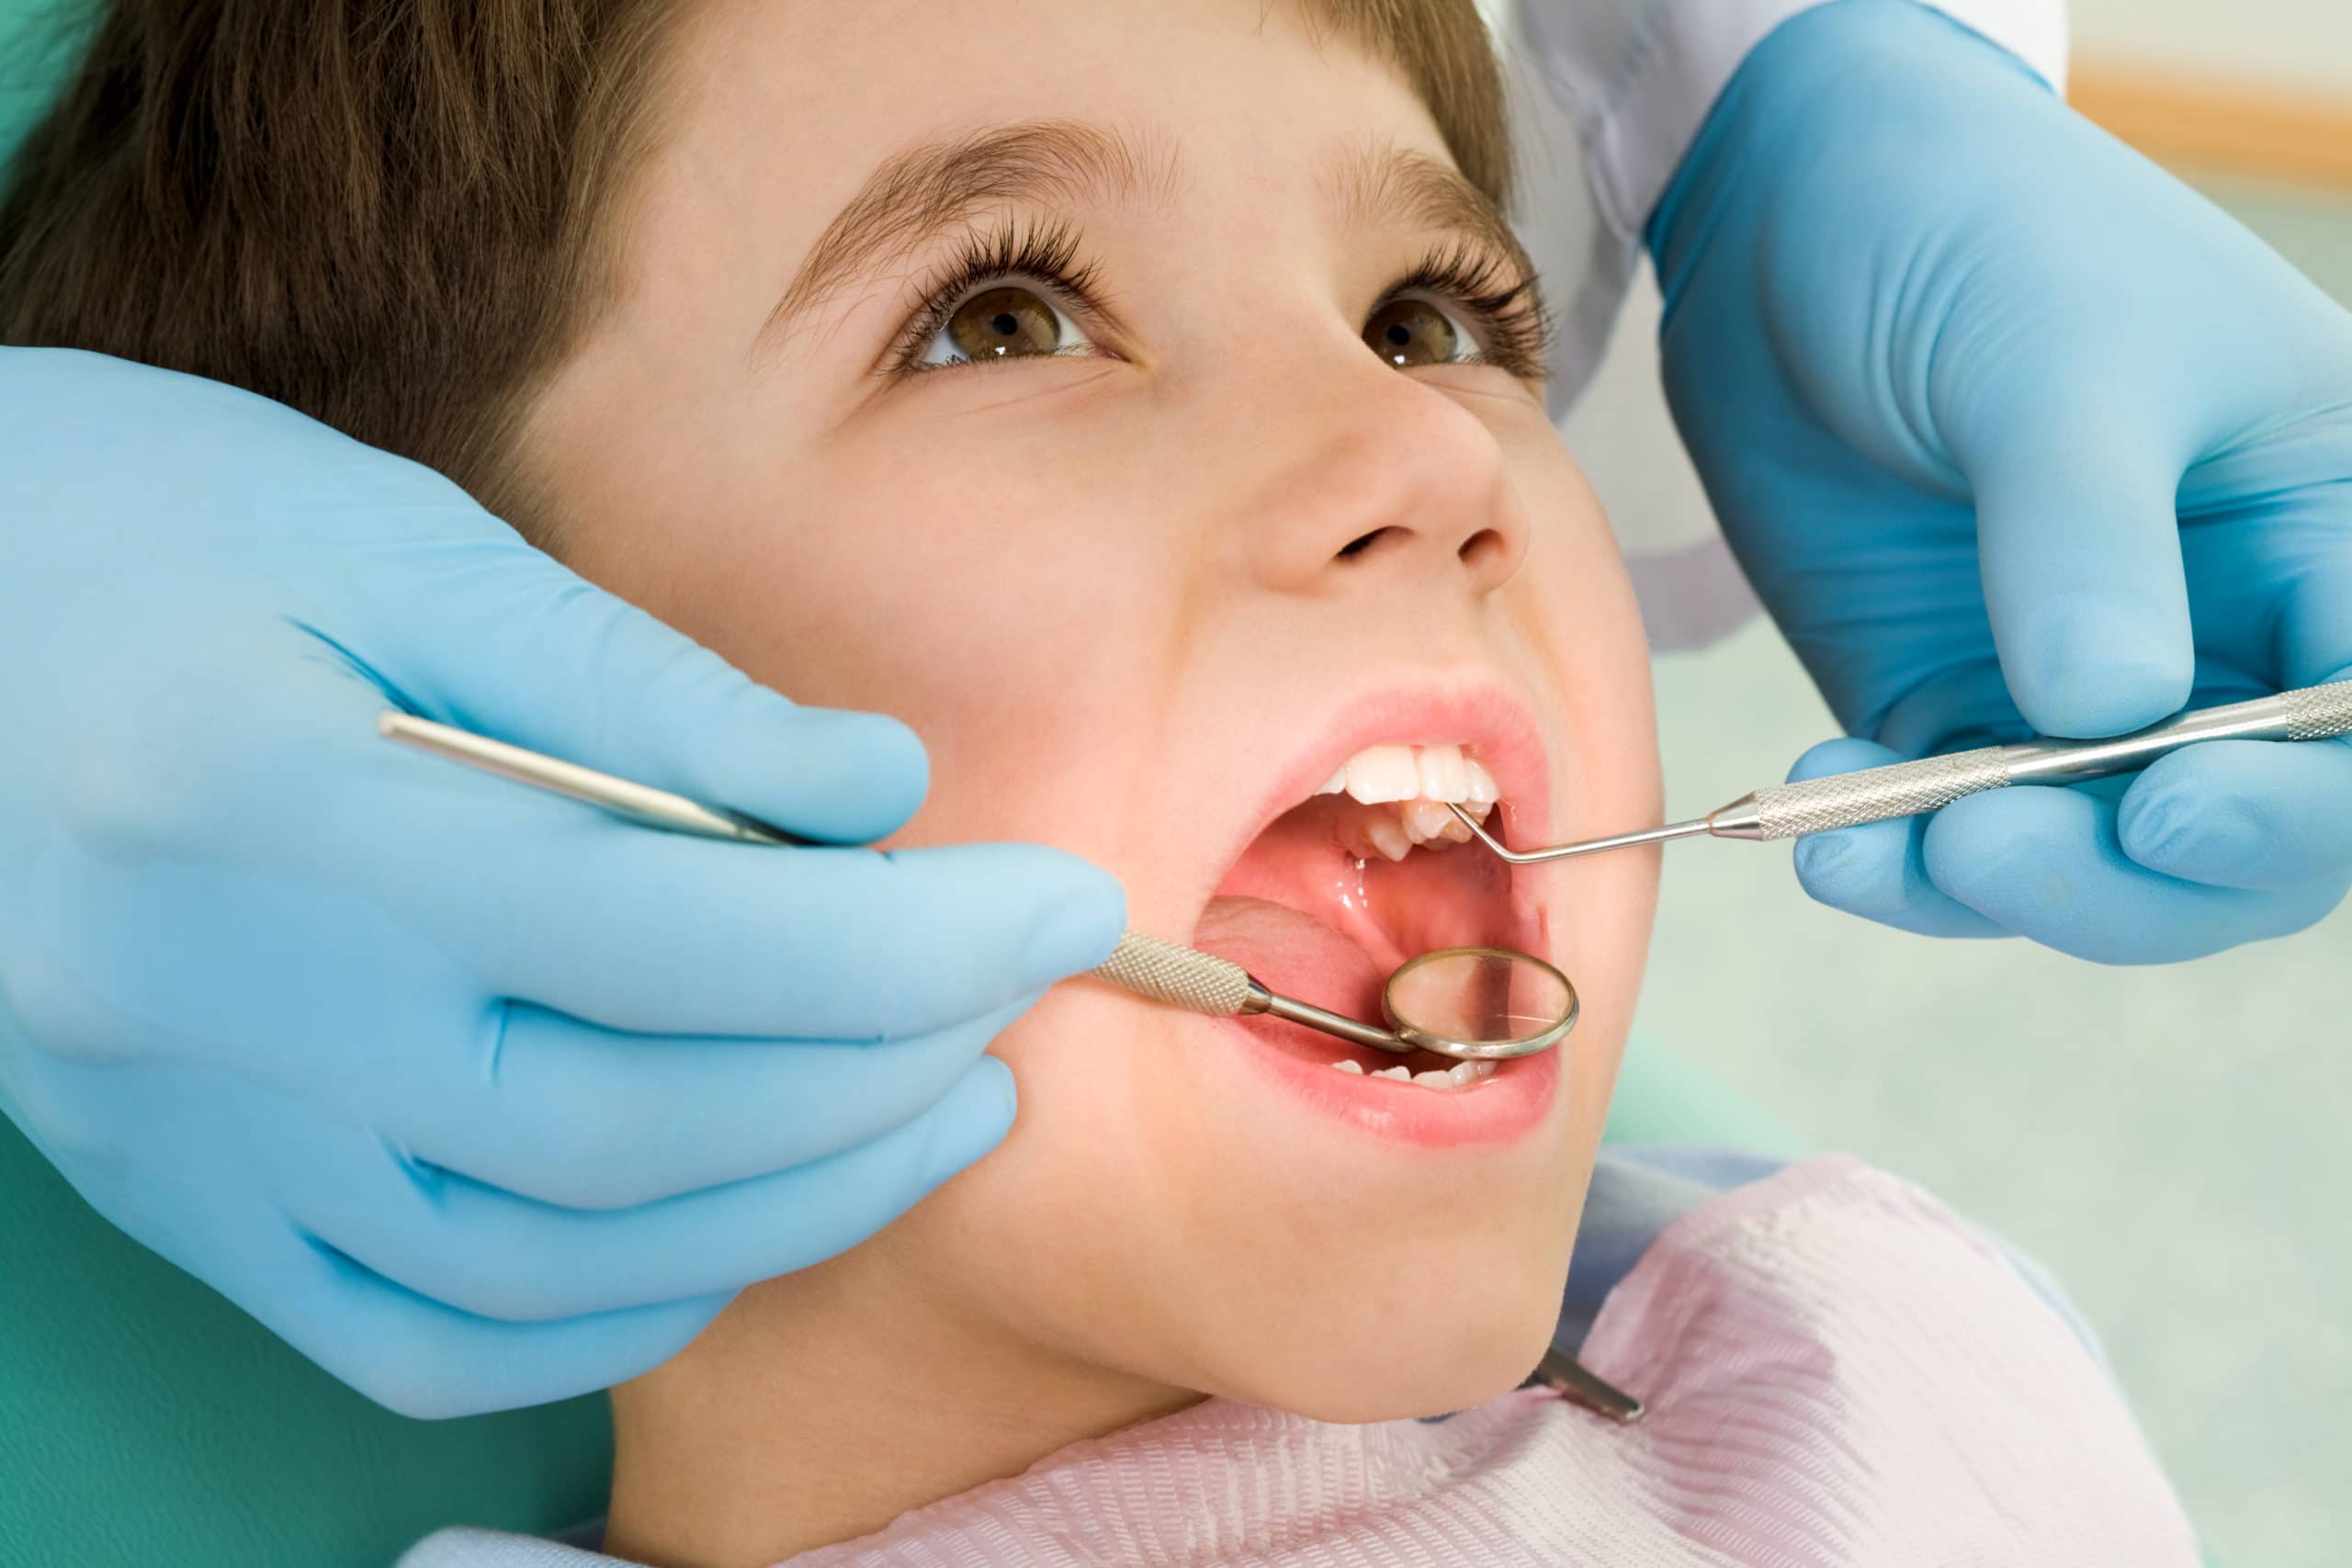 Identifying and Treating Gum Disease in Kids